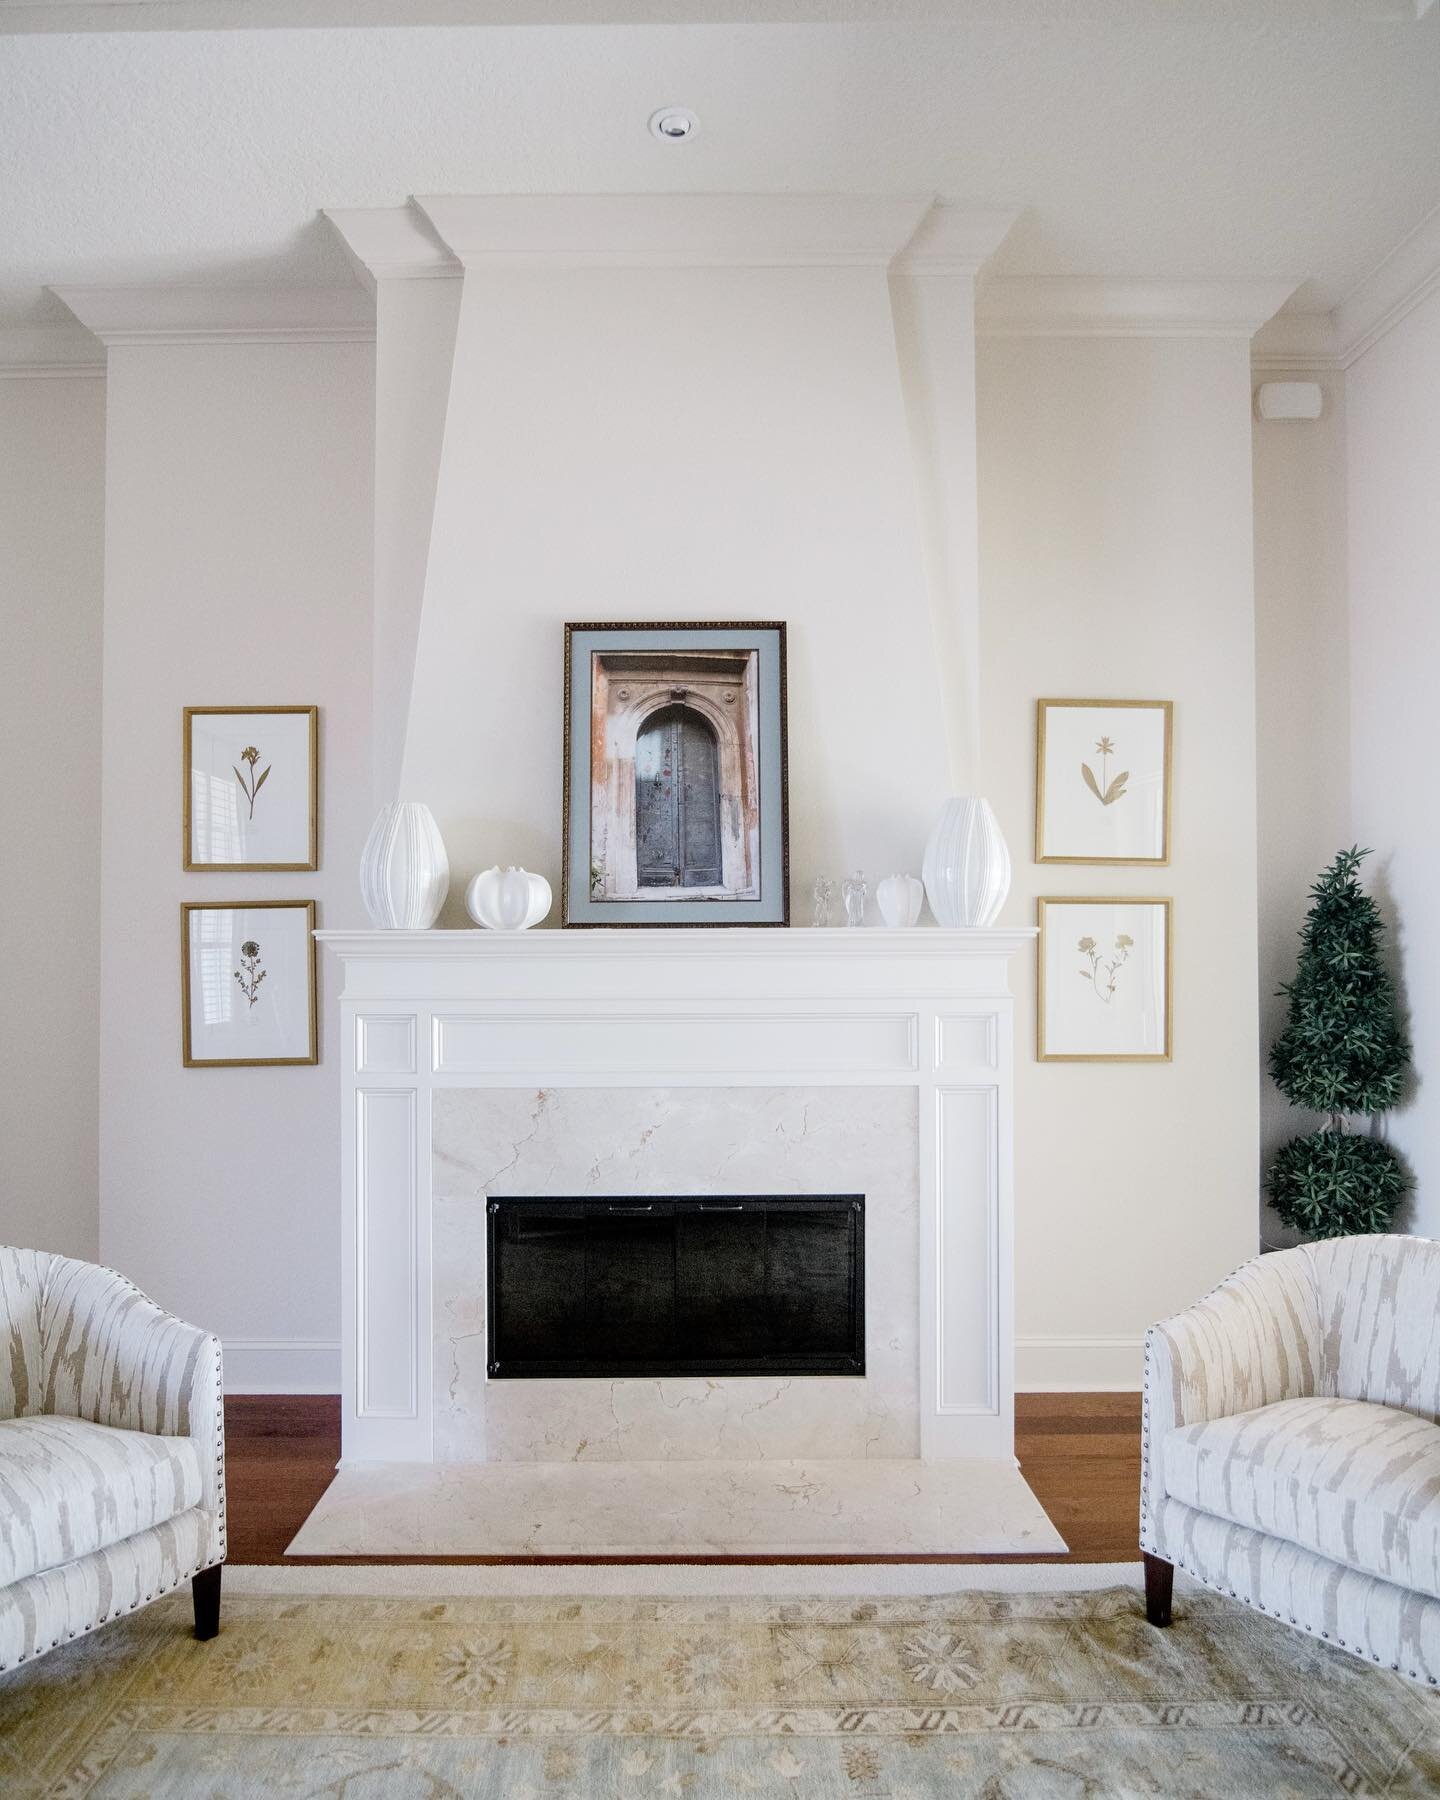 Bright &amp; timeless! Loving this simple, yet elegant, fireplace ✨